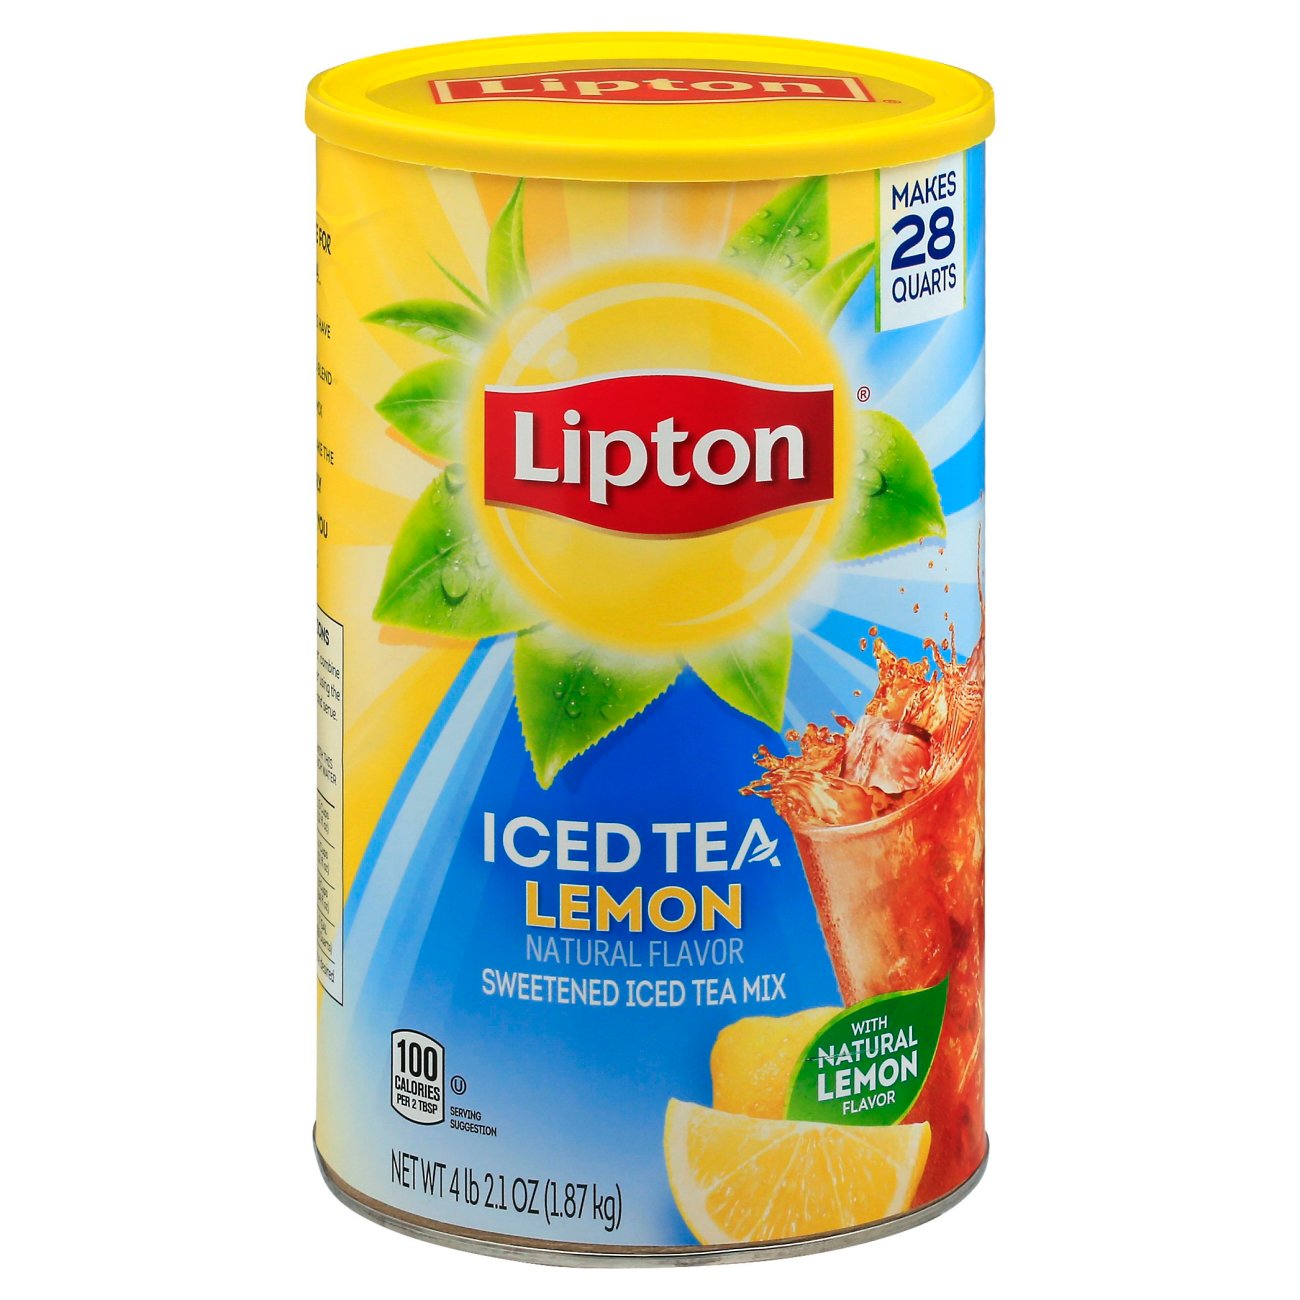 Lipton Gallon-Sized Black Unsweetened Iced Tea Bags - Shop Tea at H-E-B